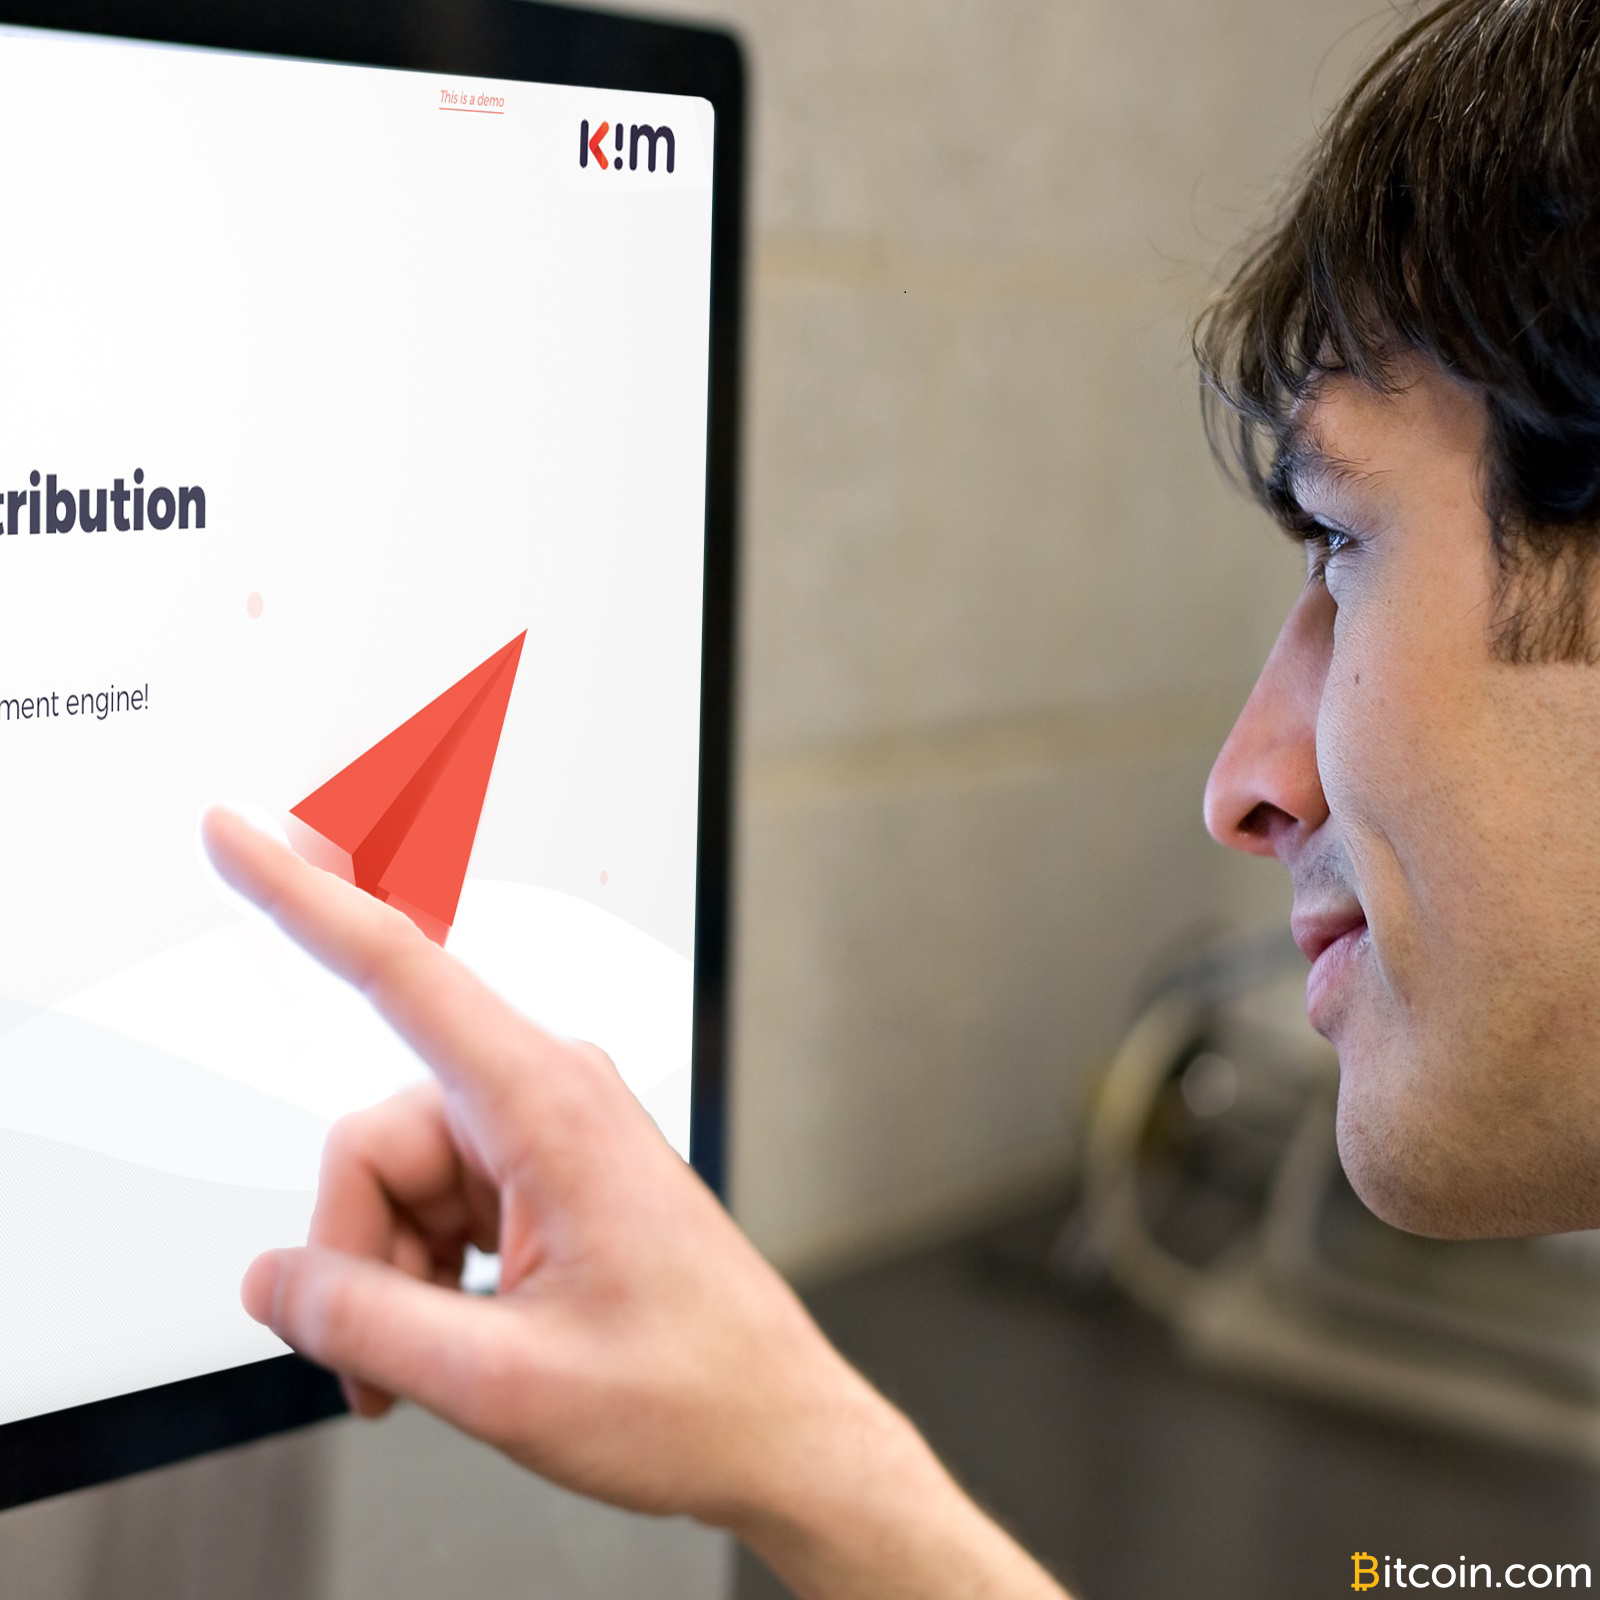 An Inside Look at Kim Dotcom's Upcoming Bitcache and K.im Platform